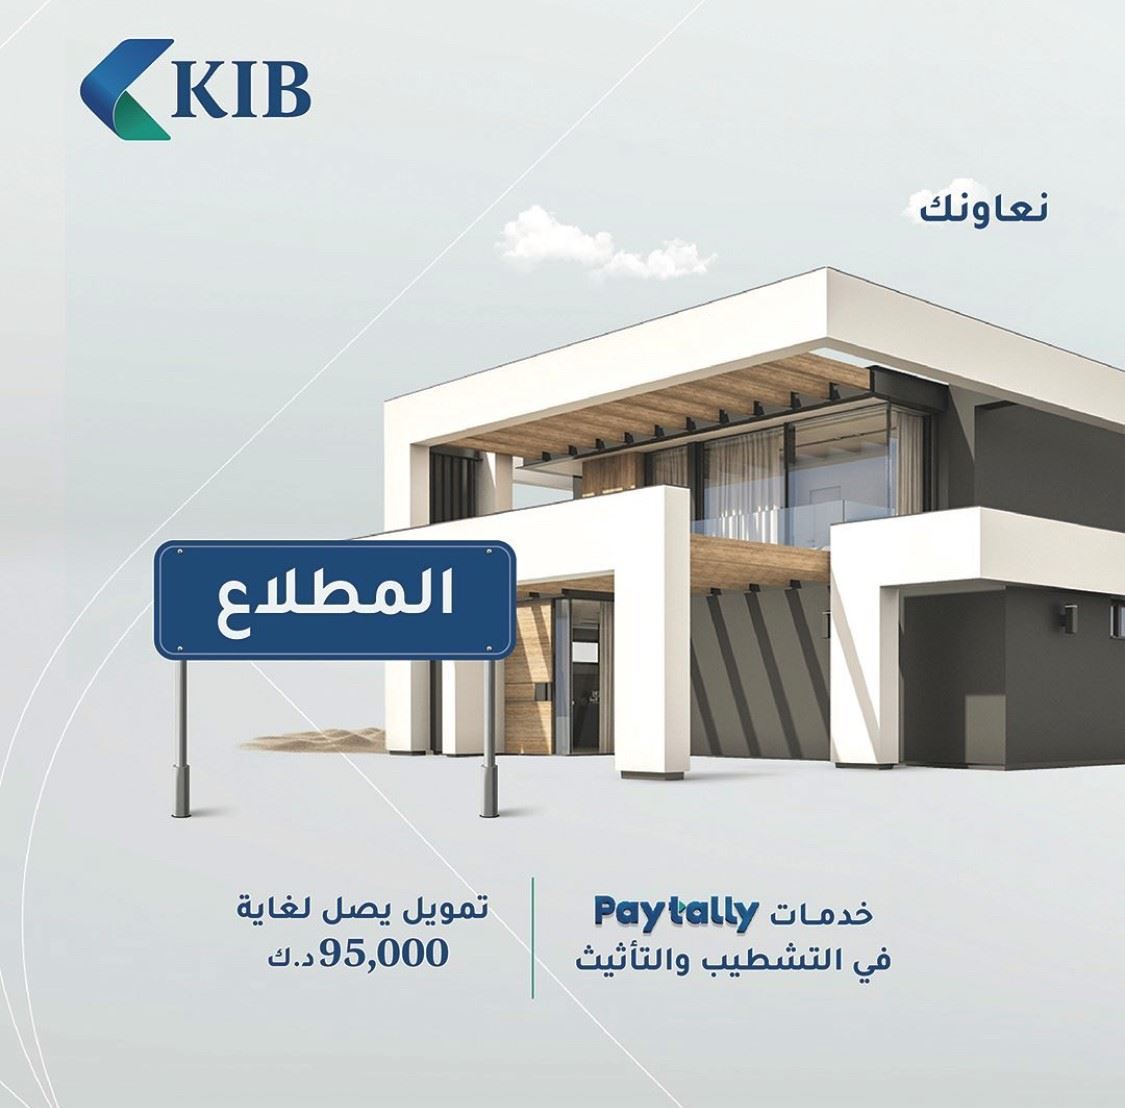 KIB يوفّر حلولاً تمويليّة وتأمينيّة مخصّصة لأهالي منطقة المطلاع